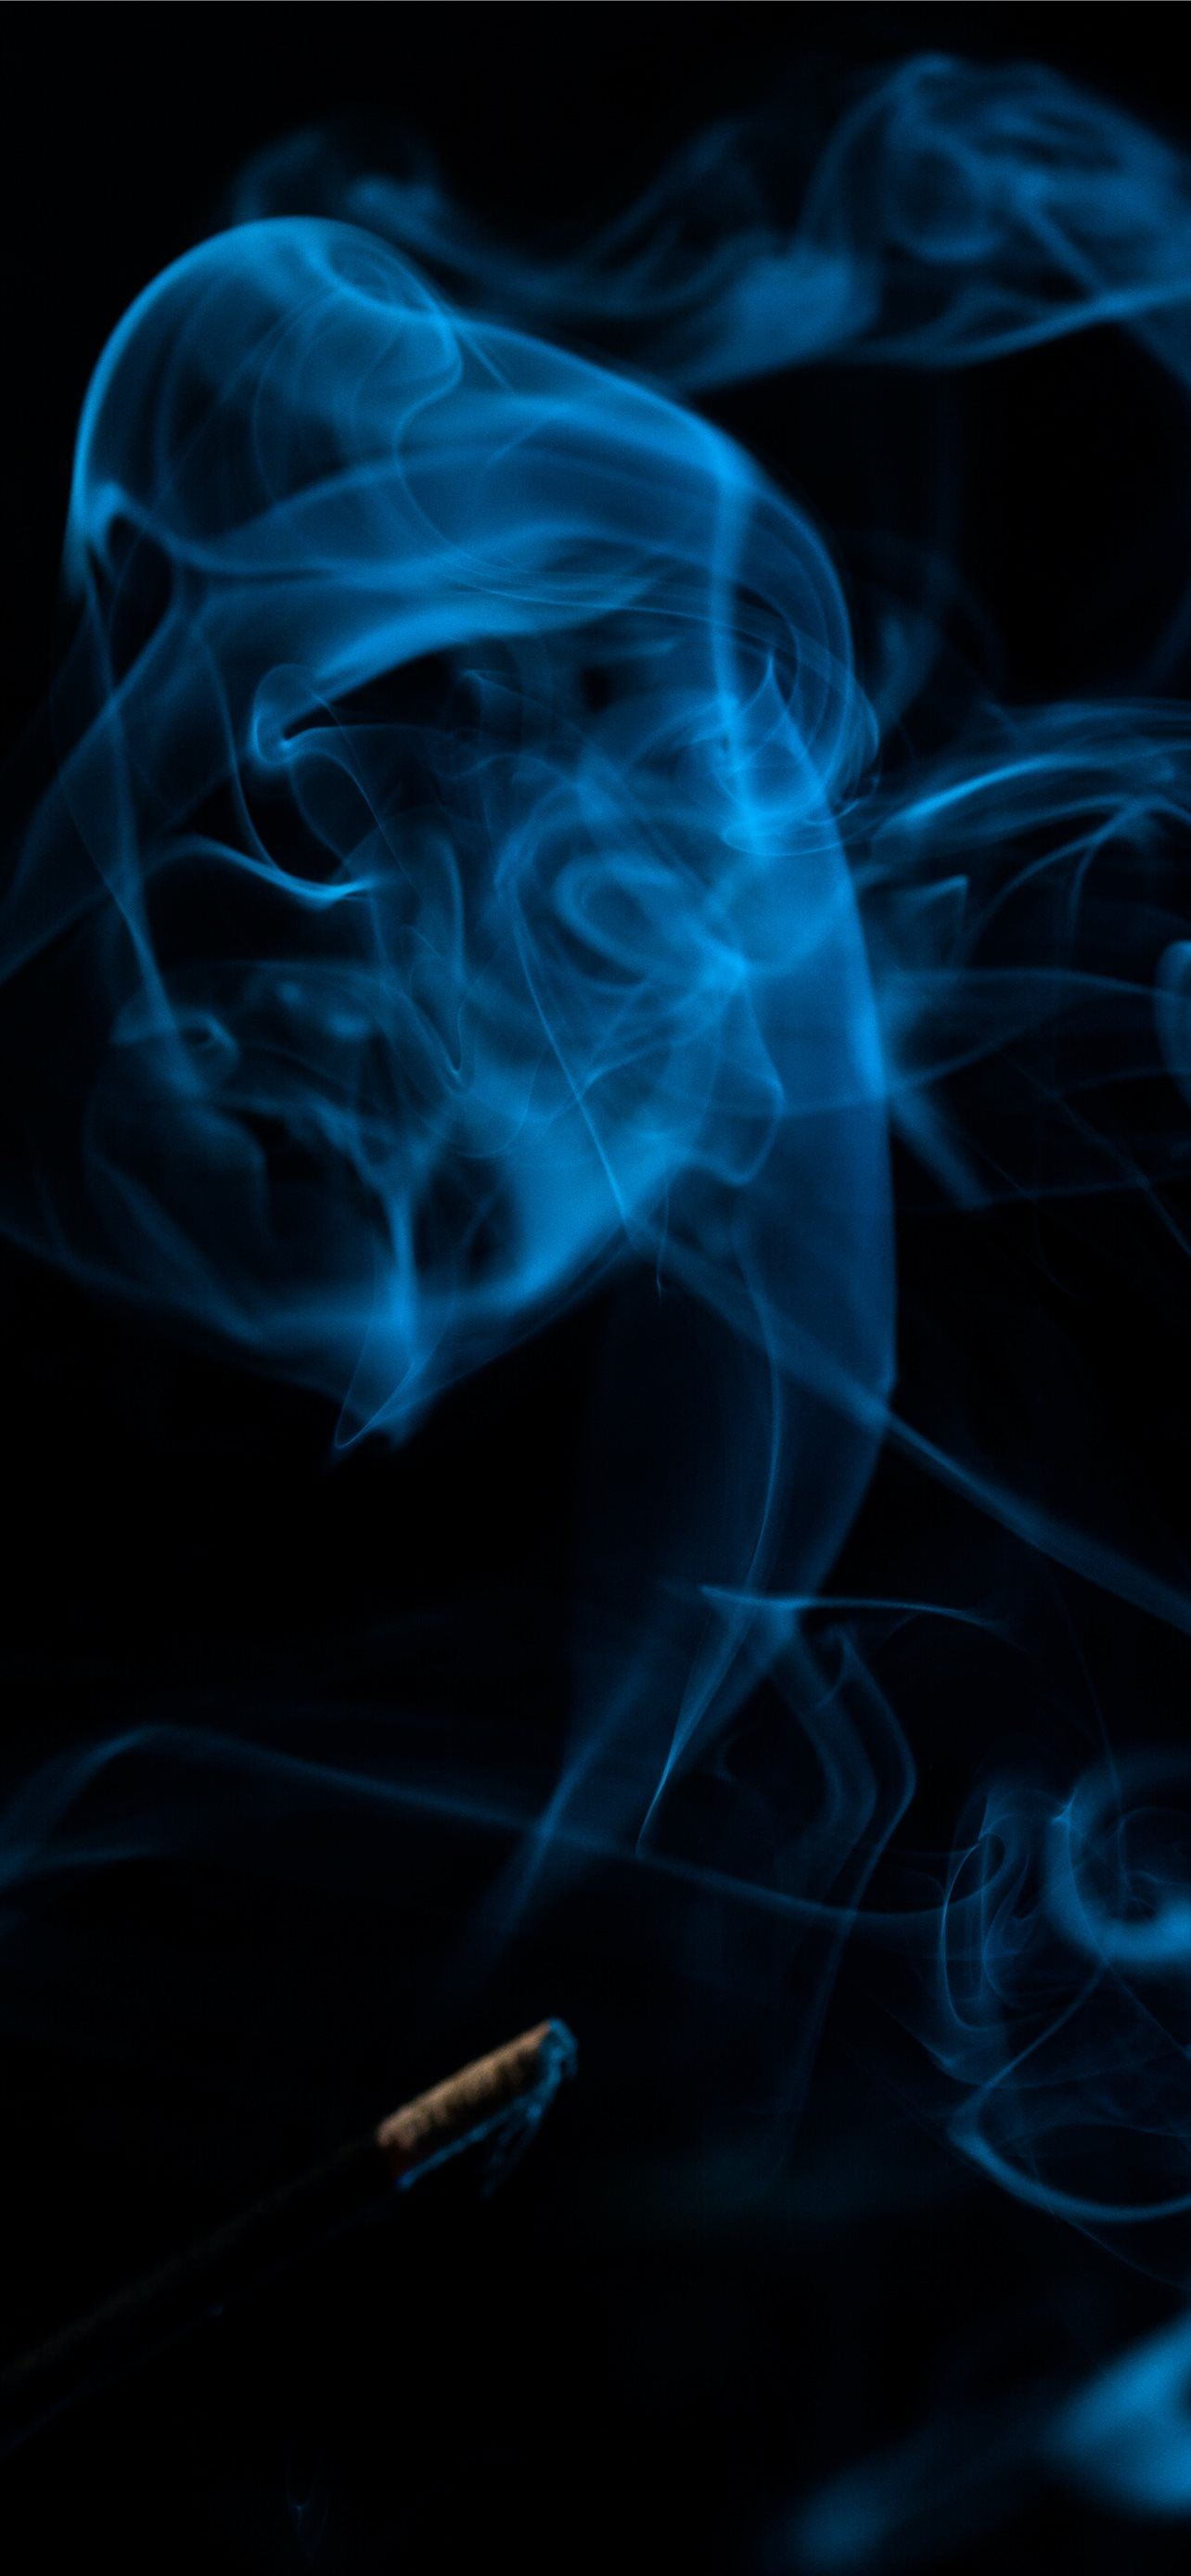 1284x2778 blue smoke wallpaper iPhone Wallpapers Free Download